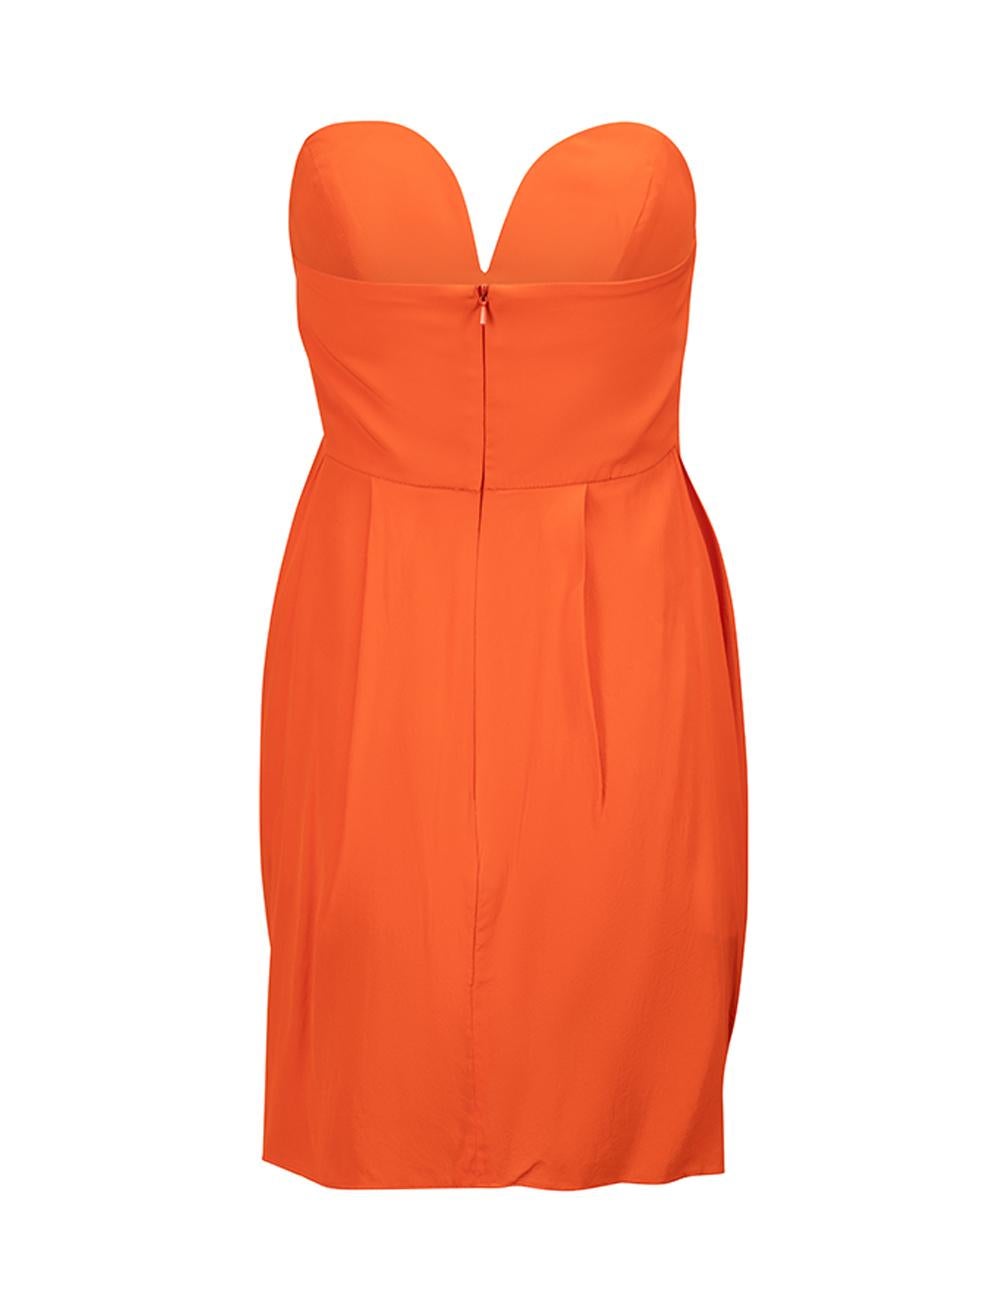 Red Orange Silk Soiree Drape Mini Dress Size M For Sale